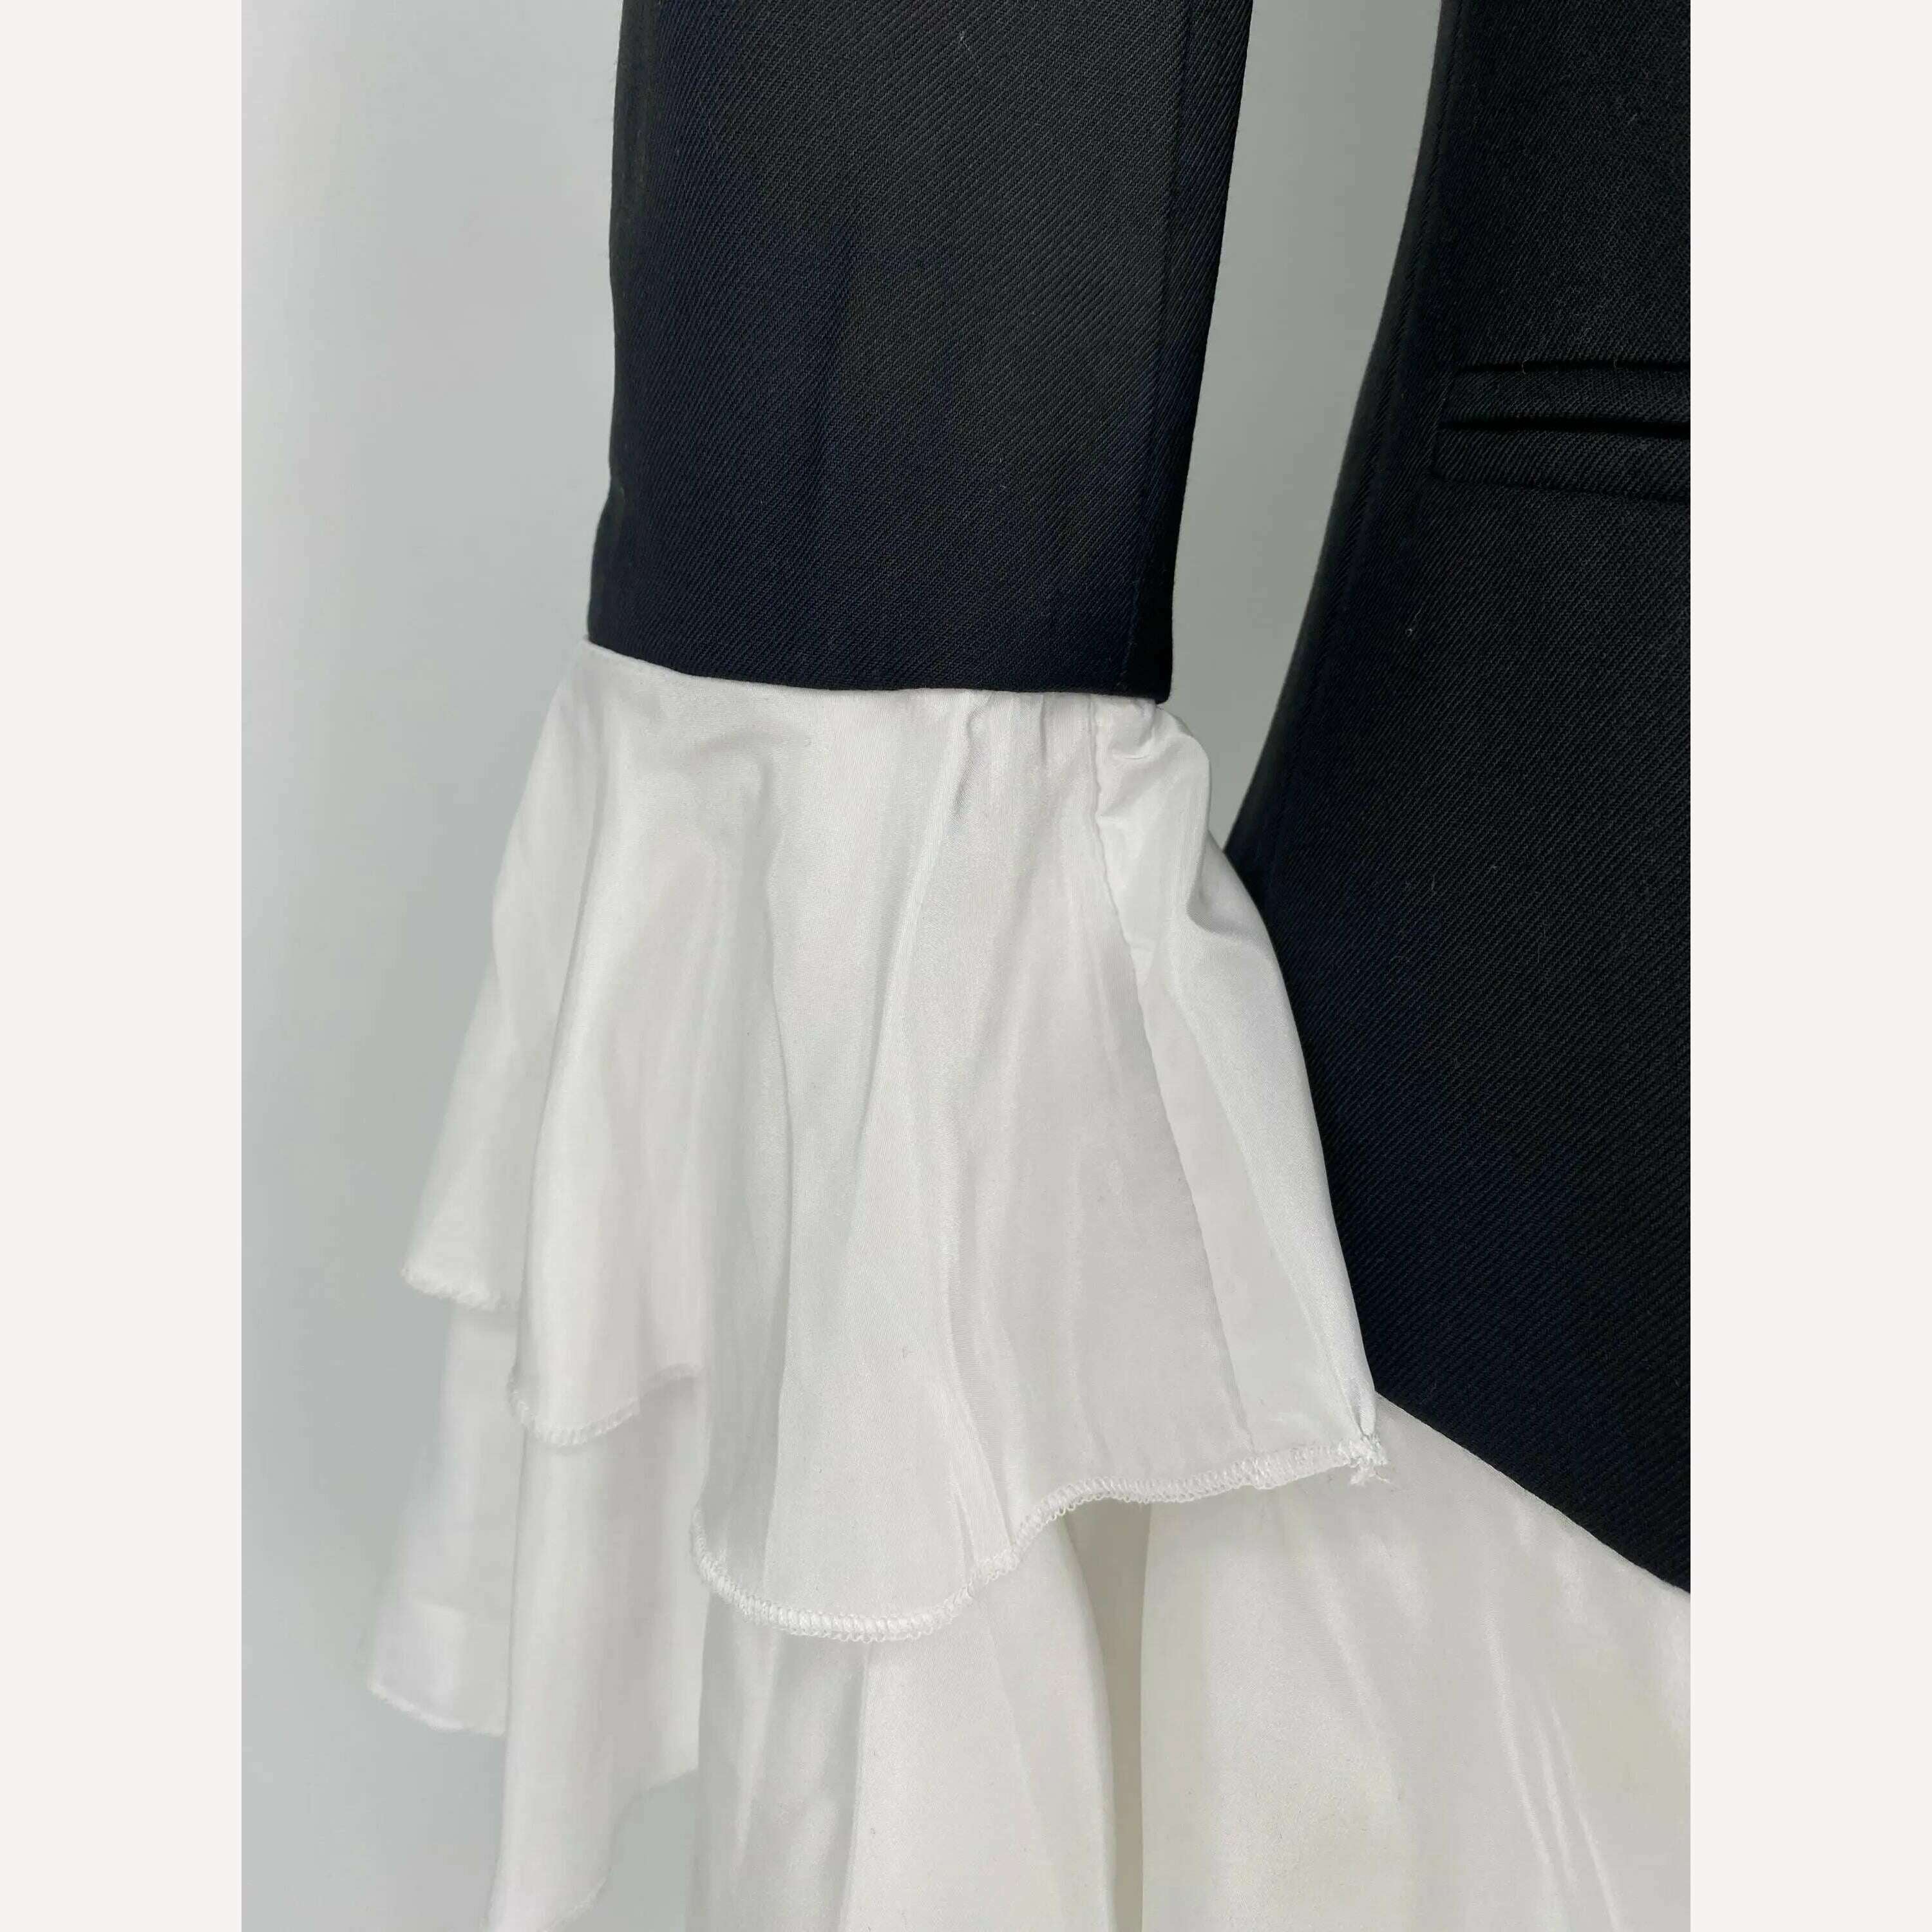 KIMLUD, Yuerwang Women Blazer Dress Lotus Ruffle Long Sleeve Long Patchworok Blazer Black White Coat Women Slim Suit Jacket 2022 New, KIMLUD Womens Clothes